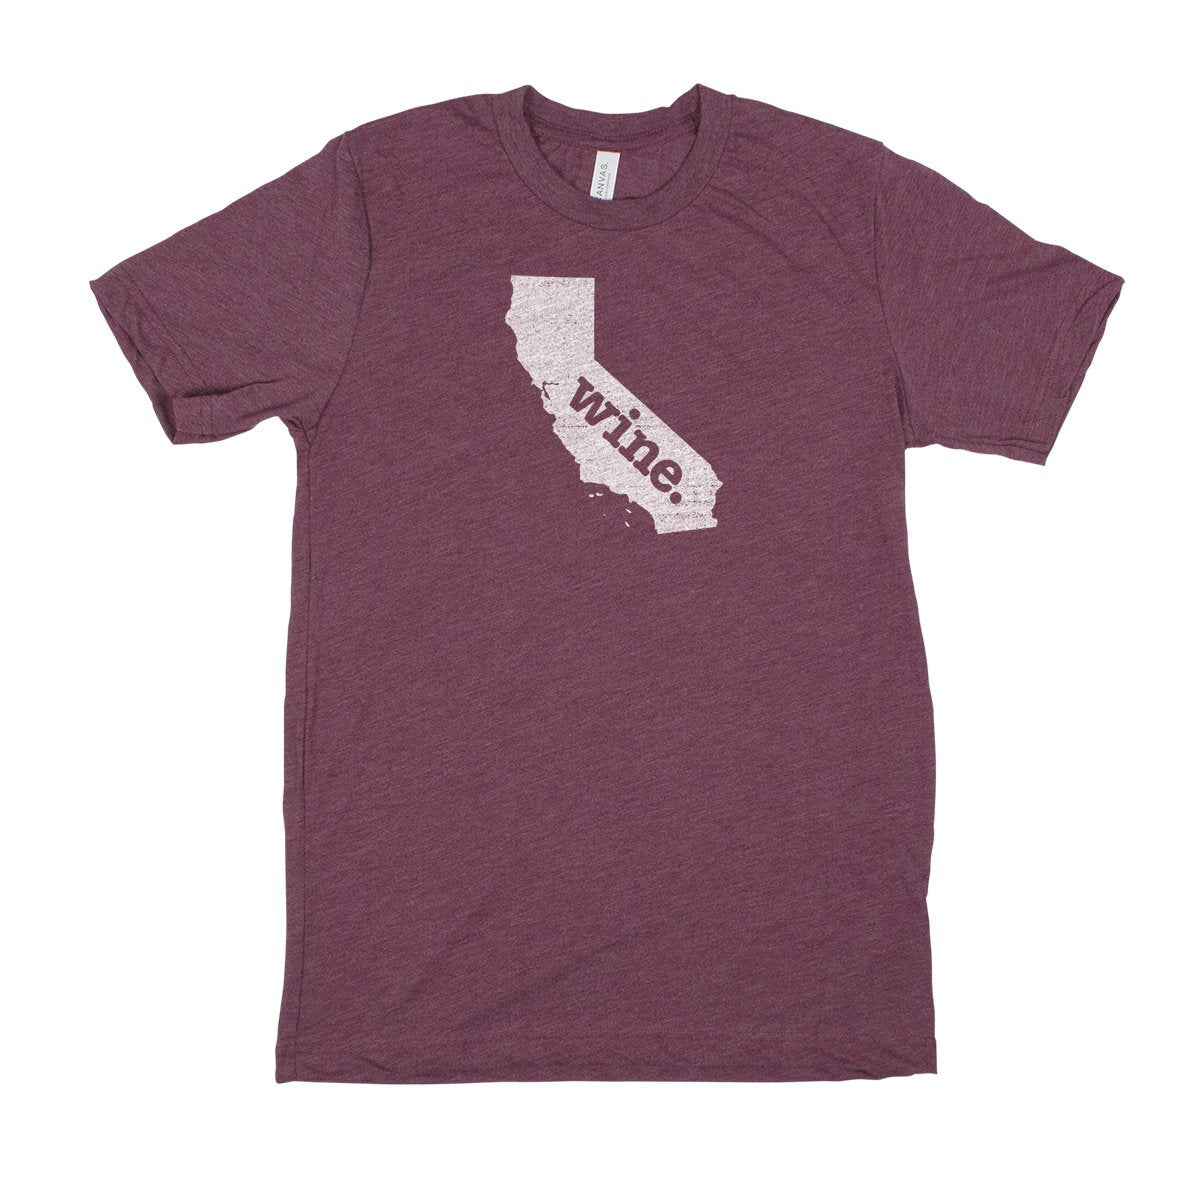 fish. Men's Unisex T-Shirt - New Mexico